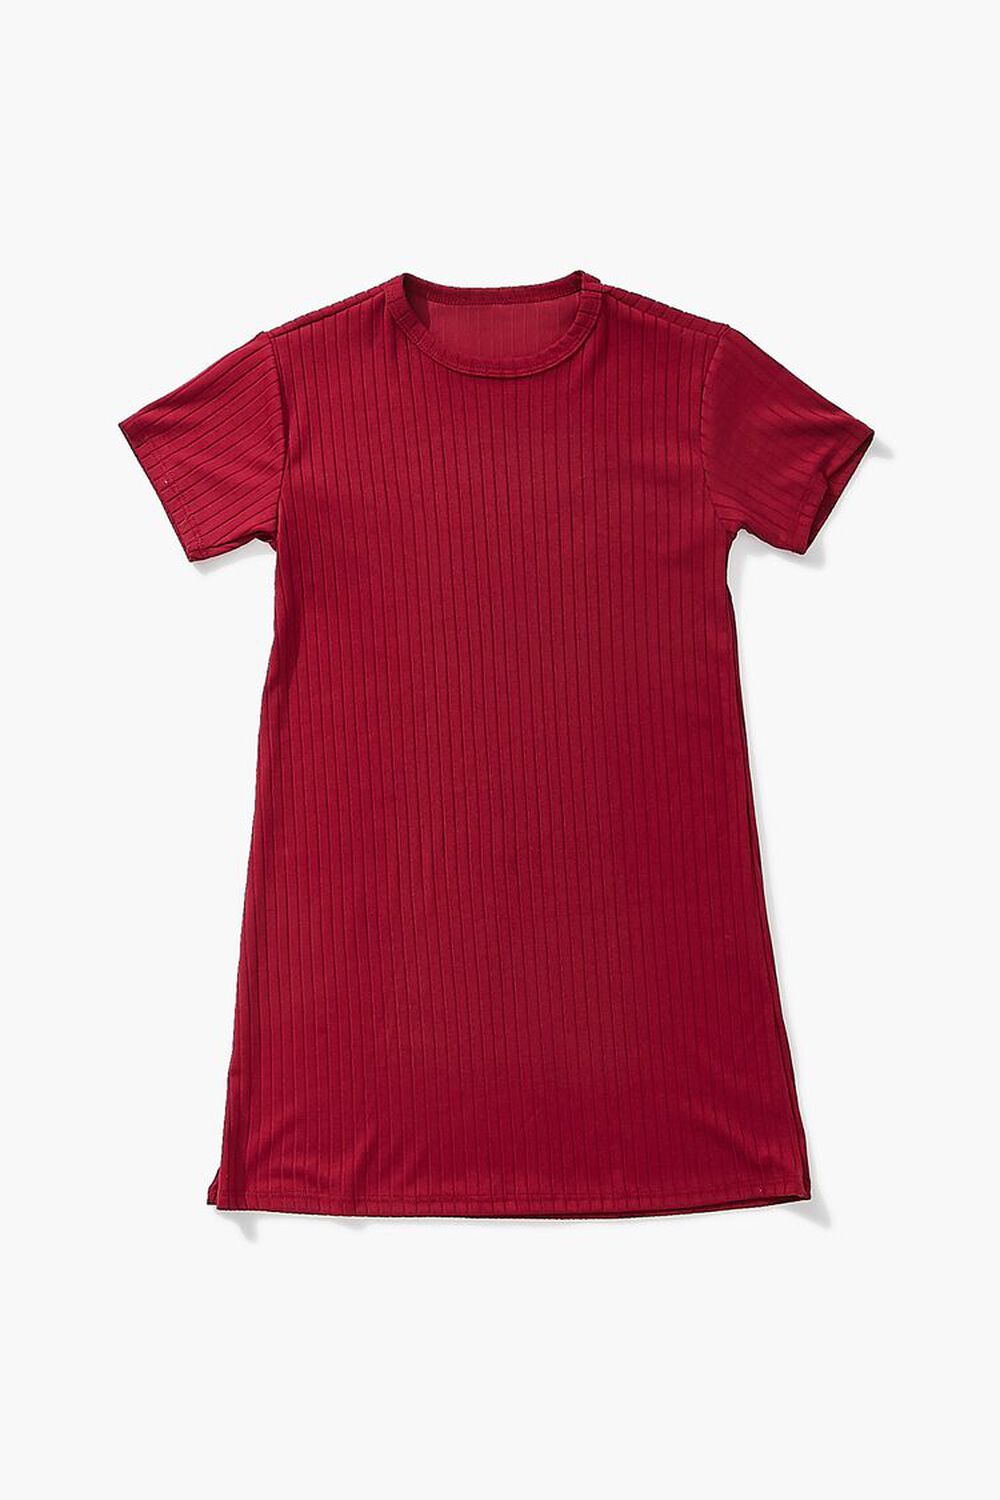 BURGUNDY Girls Ribbed T-Shirt Dress (Kids), image 1